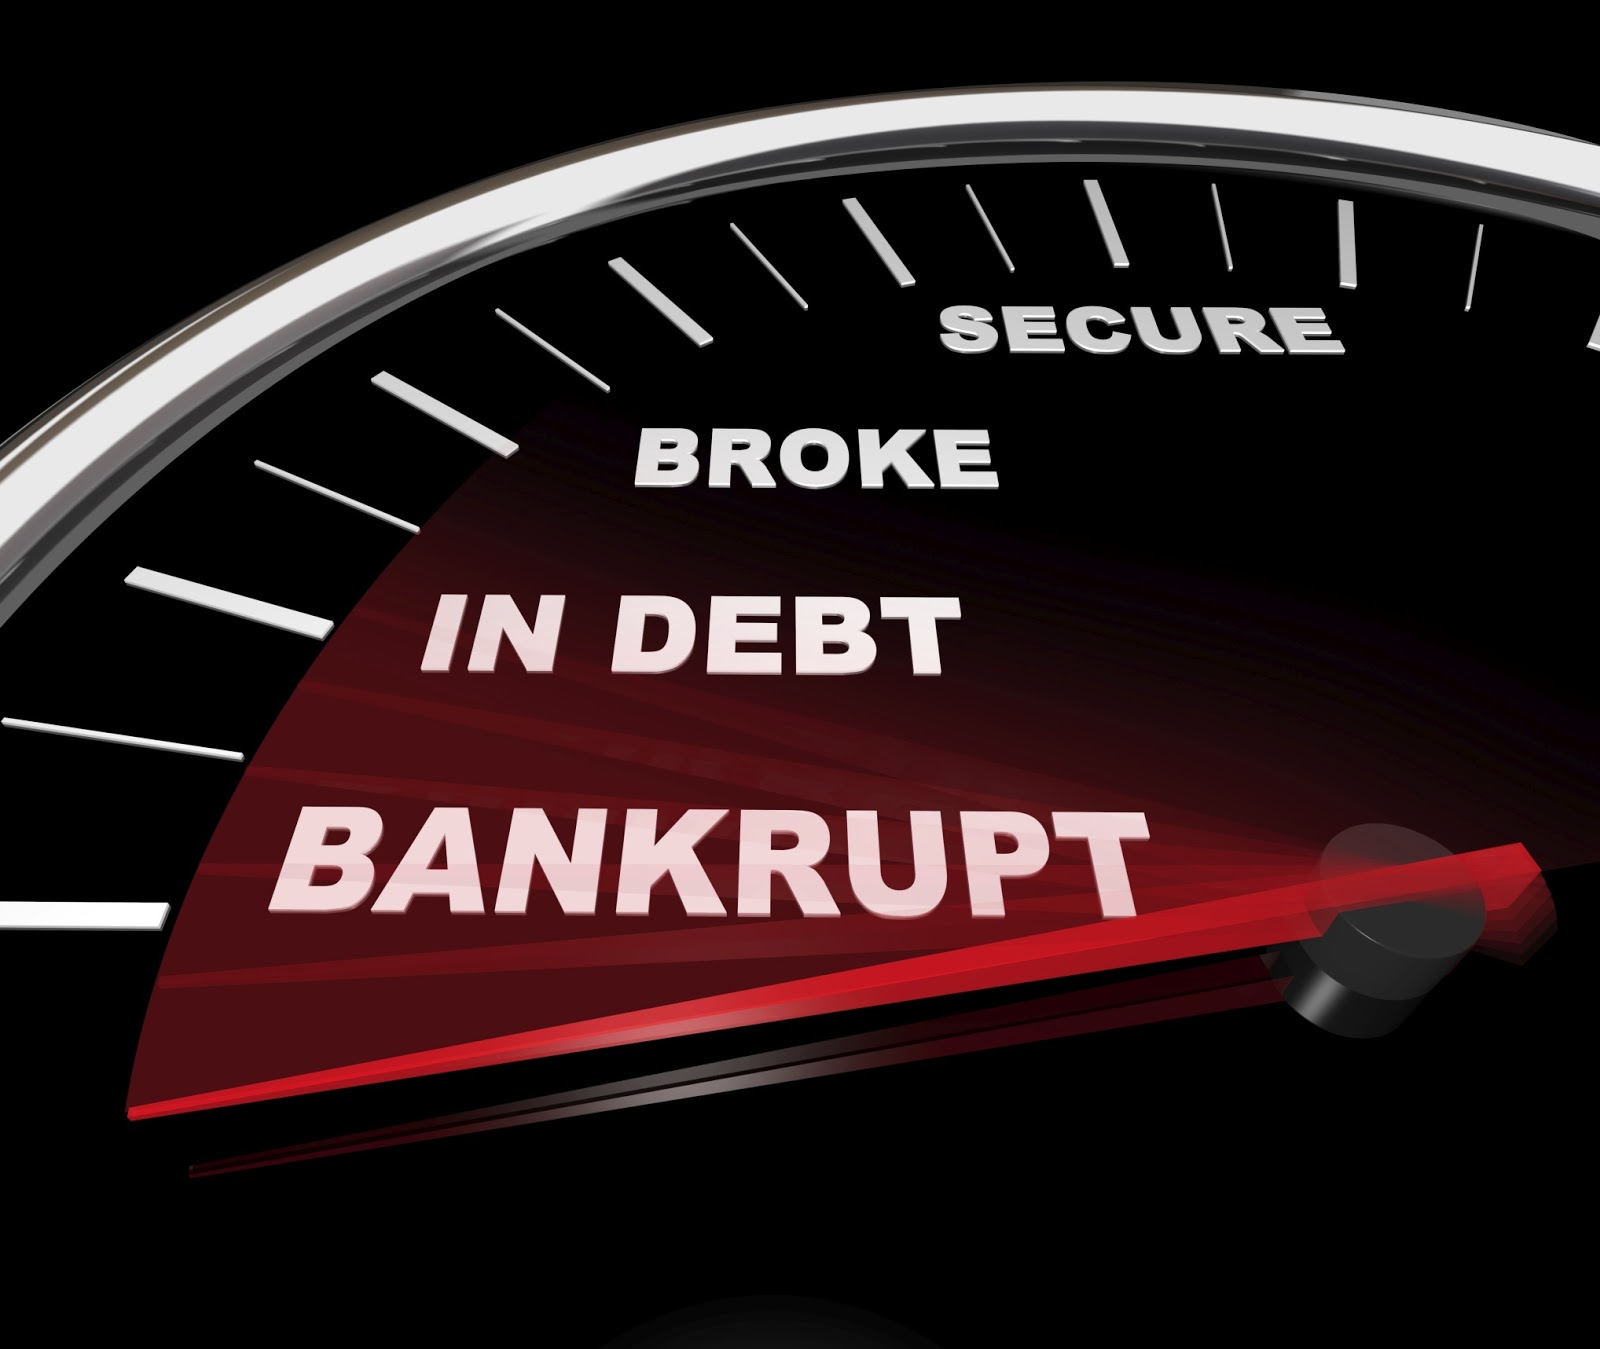 BankruptSpedometer.jpg